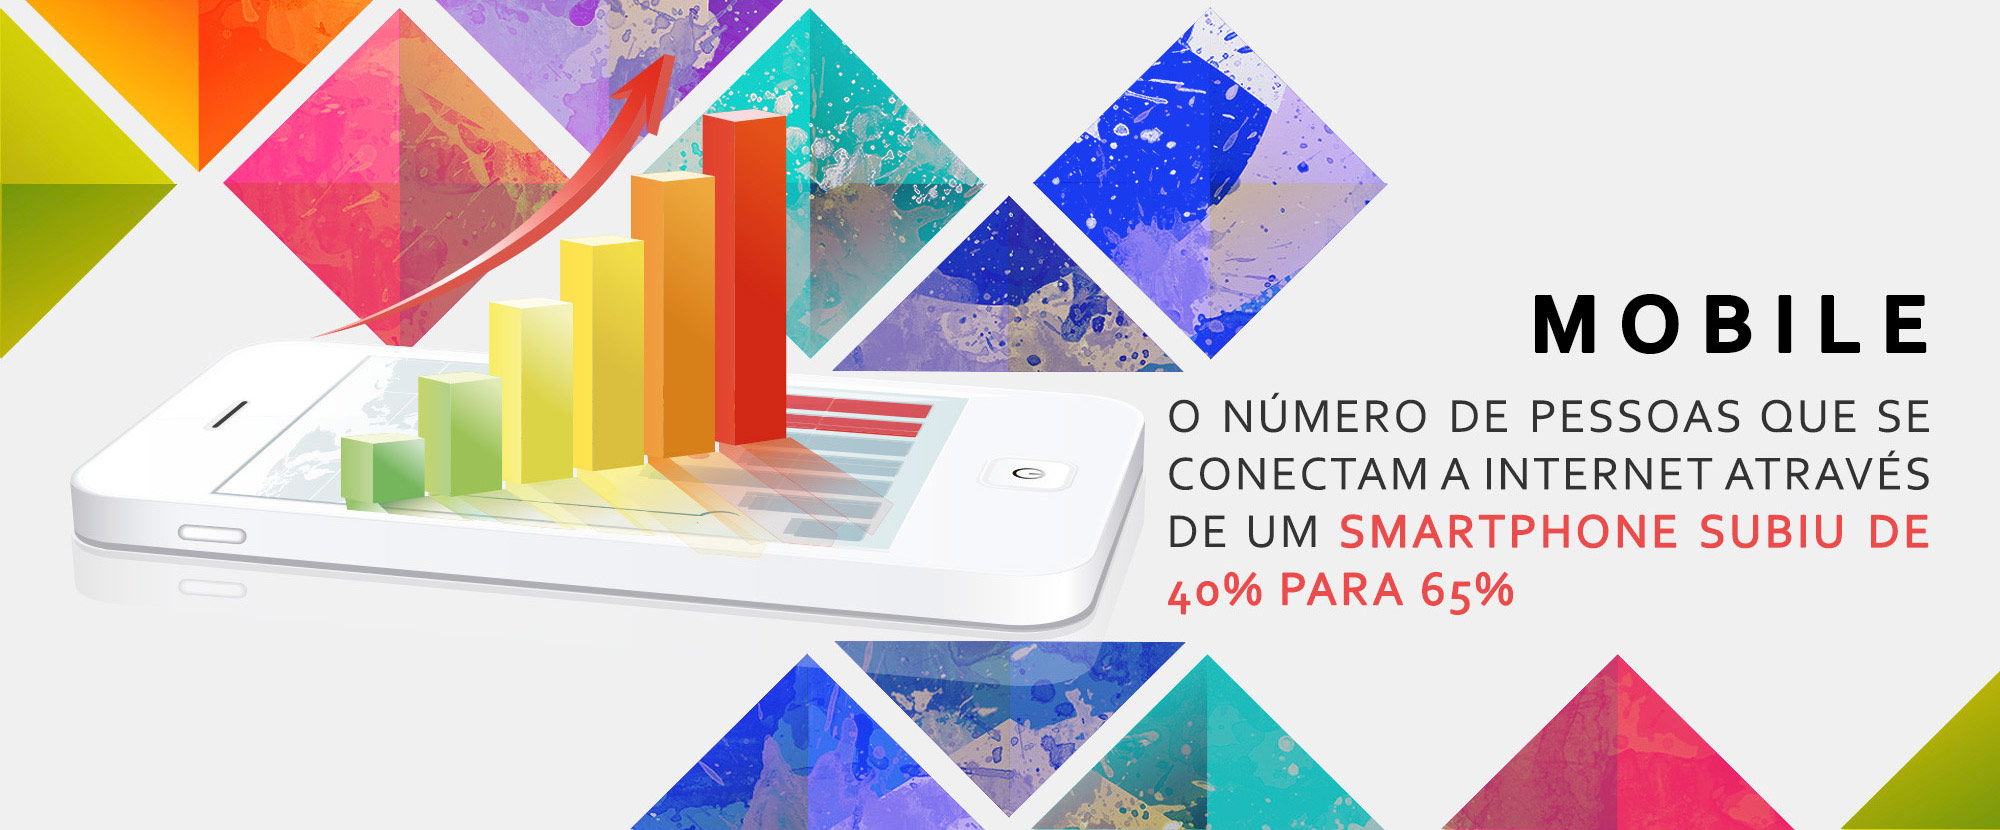 Infogrfico: Pesquisa Brasileira de Mdia 2015